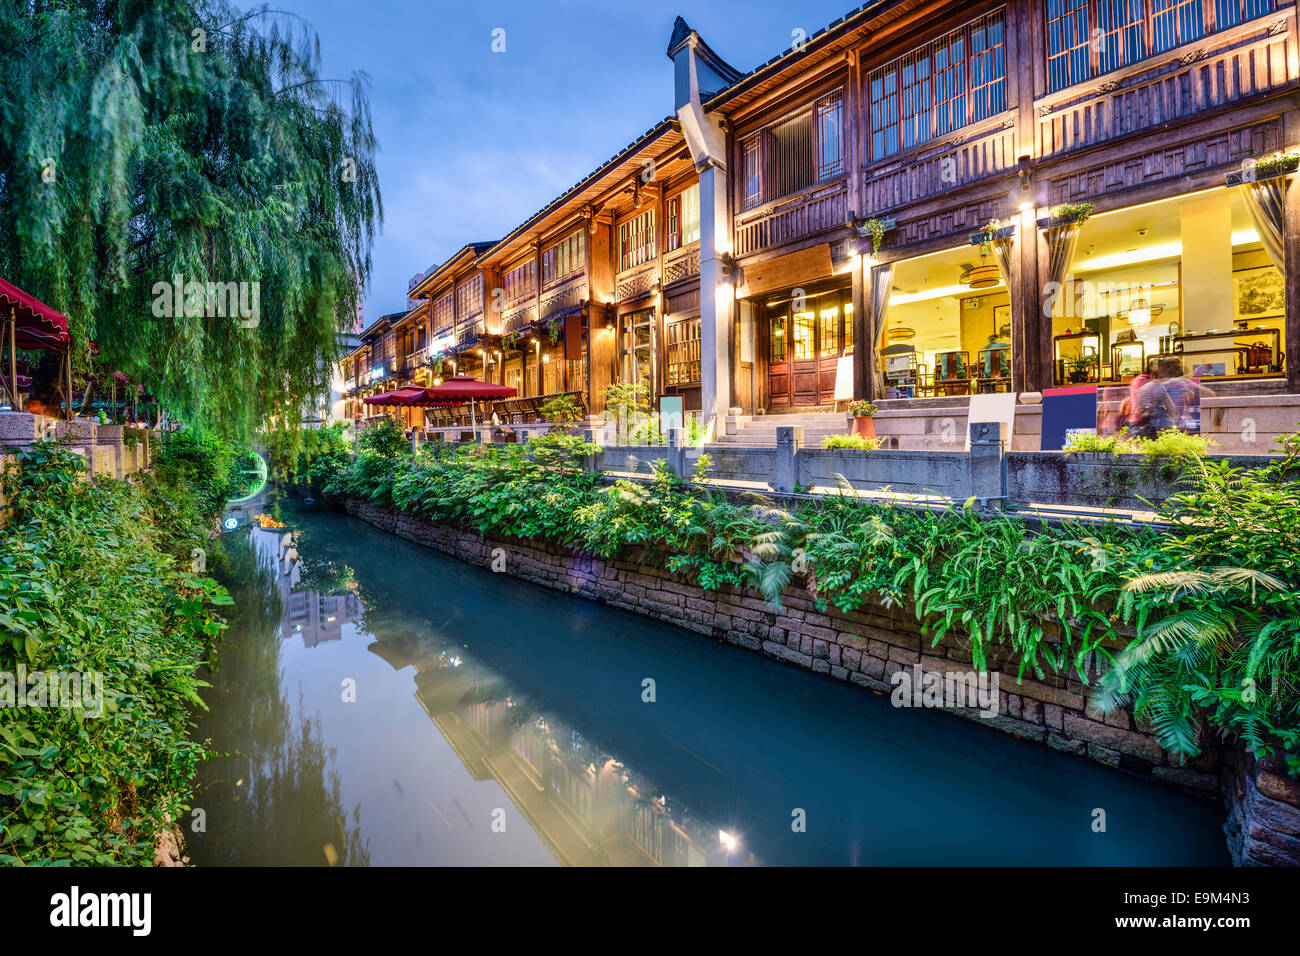 Fuzhou, China at Three Lanes Seven Alleys traditional shopping district. Stock Photo